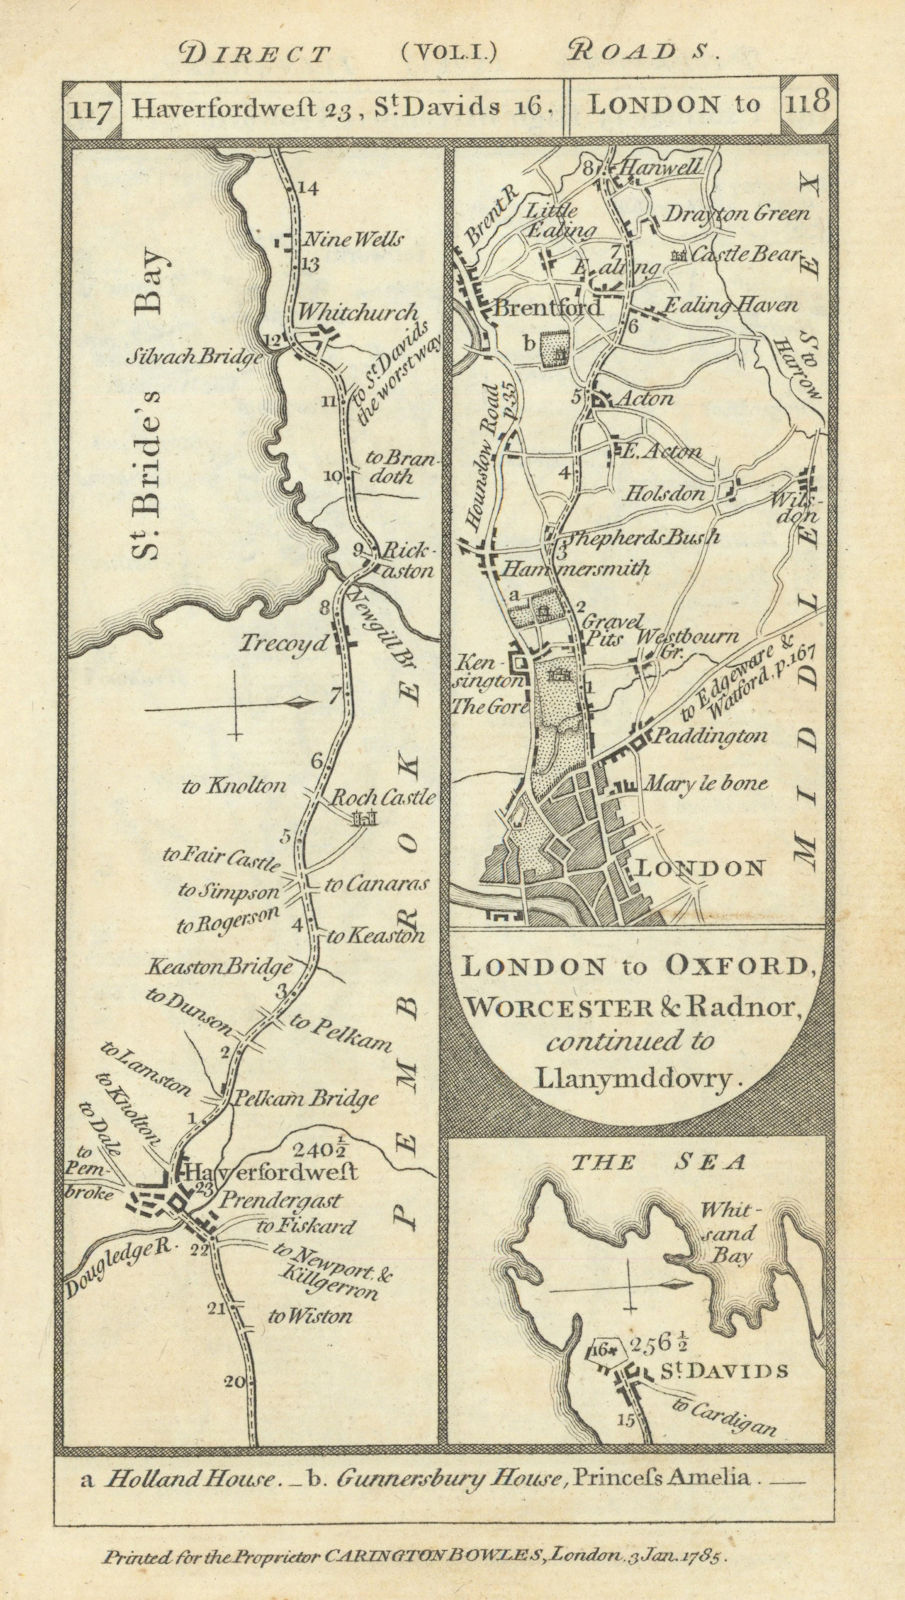 Associate Product Haverfordwest-St. David's. Kensington-Ealing road strip map PATERSON 1785